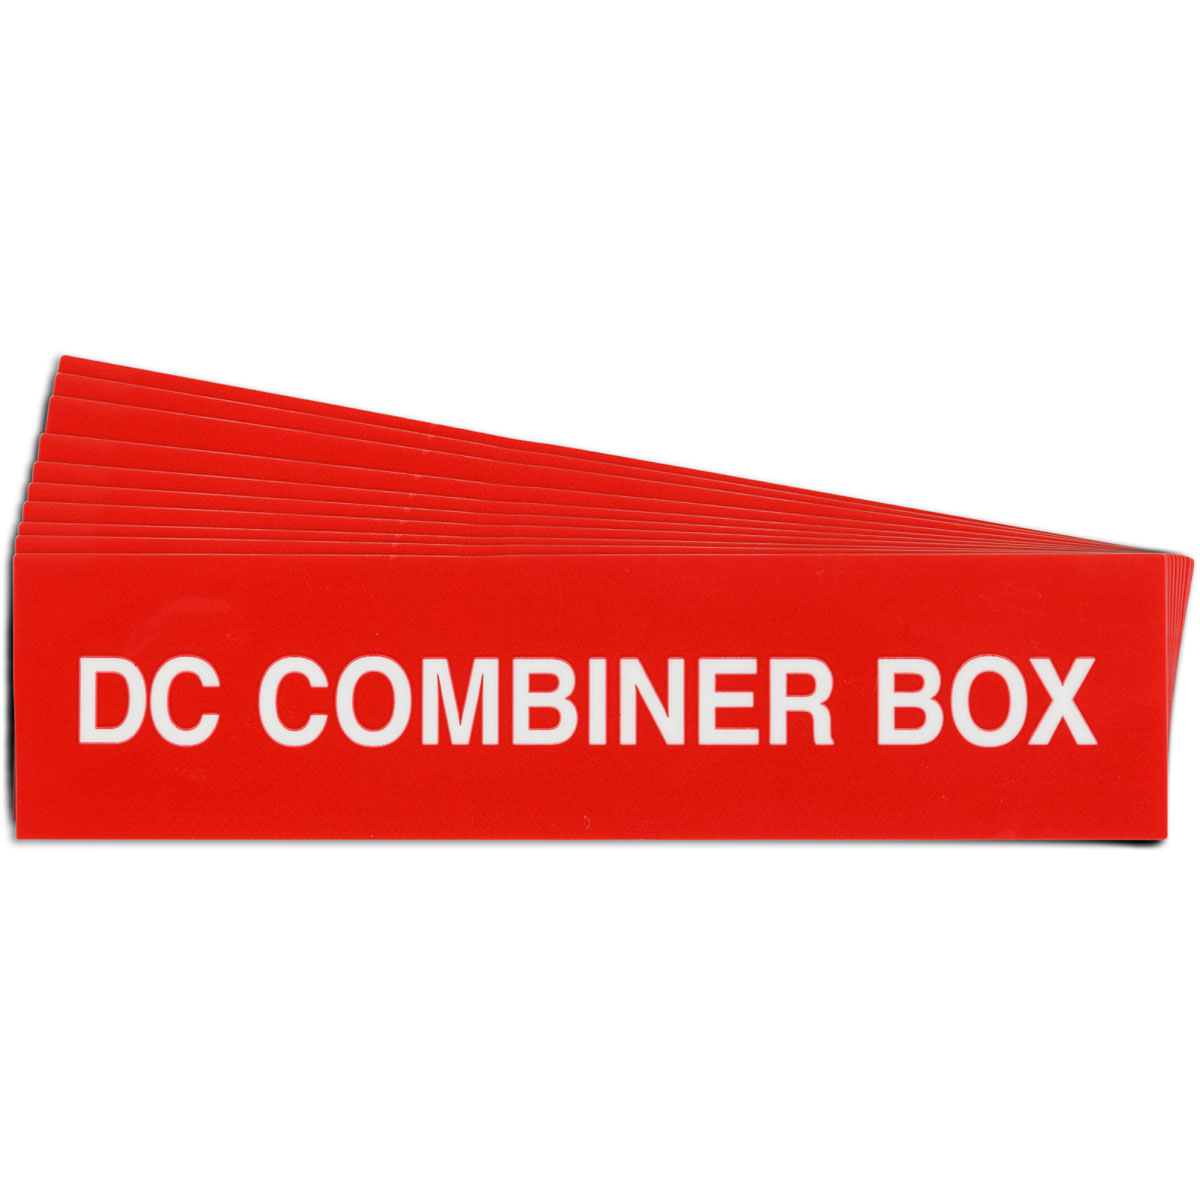 Pre-Printed SOLAR DC COMBINER BOX Warning Labels